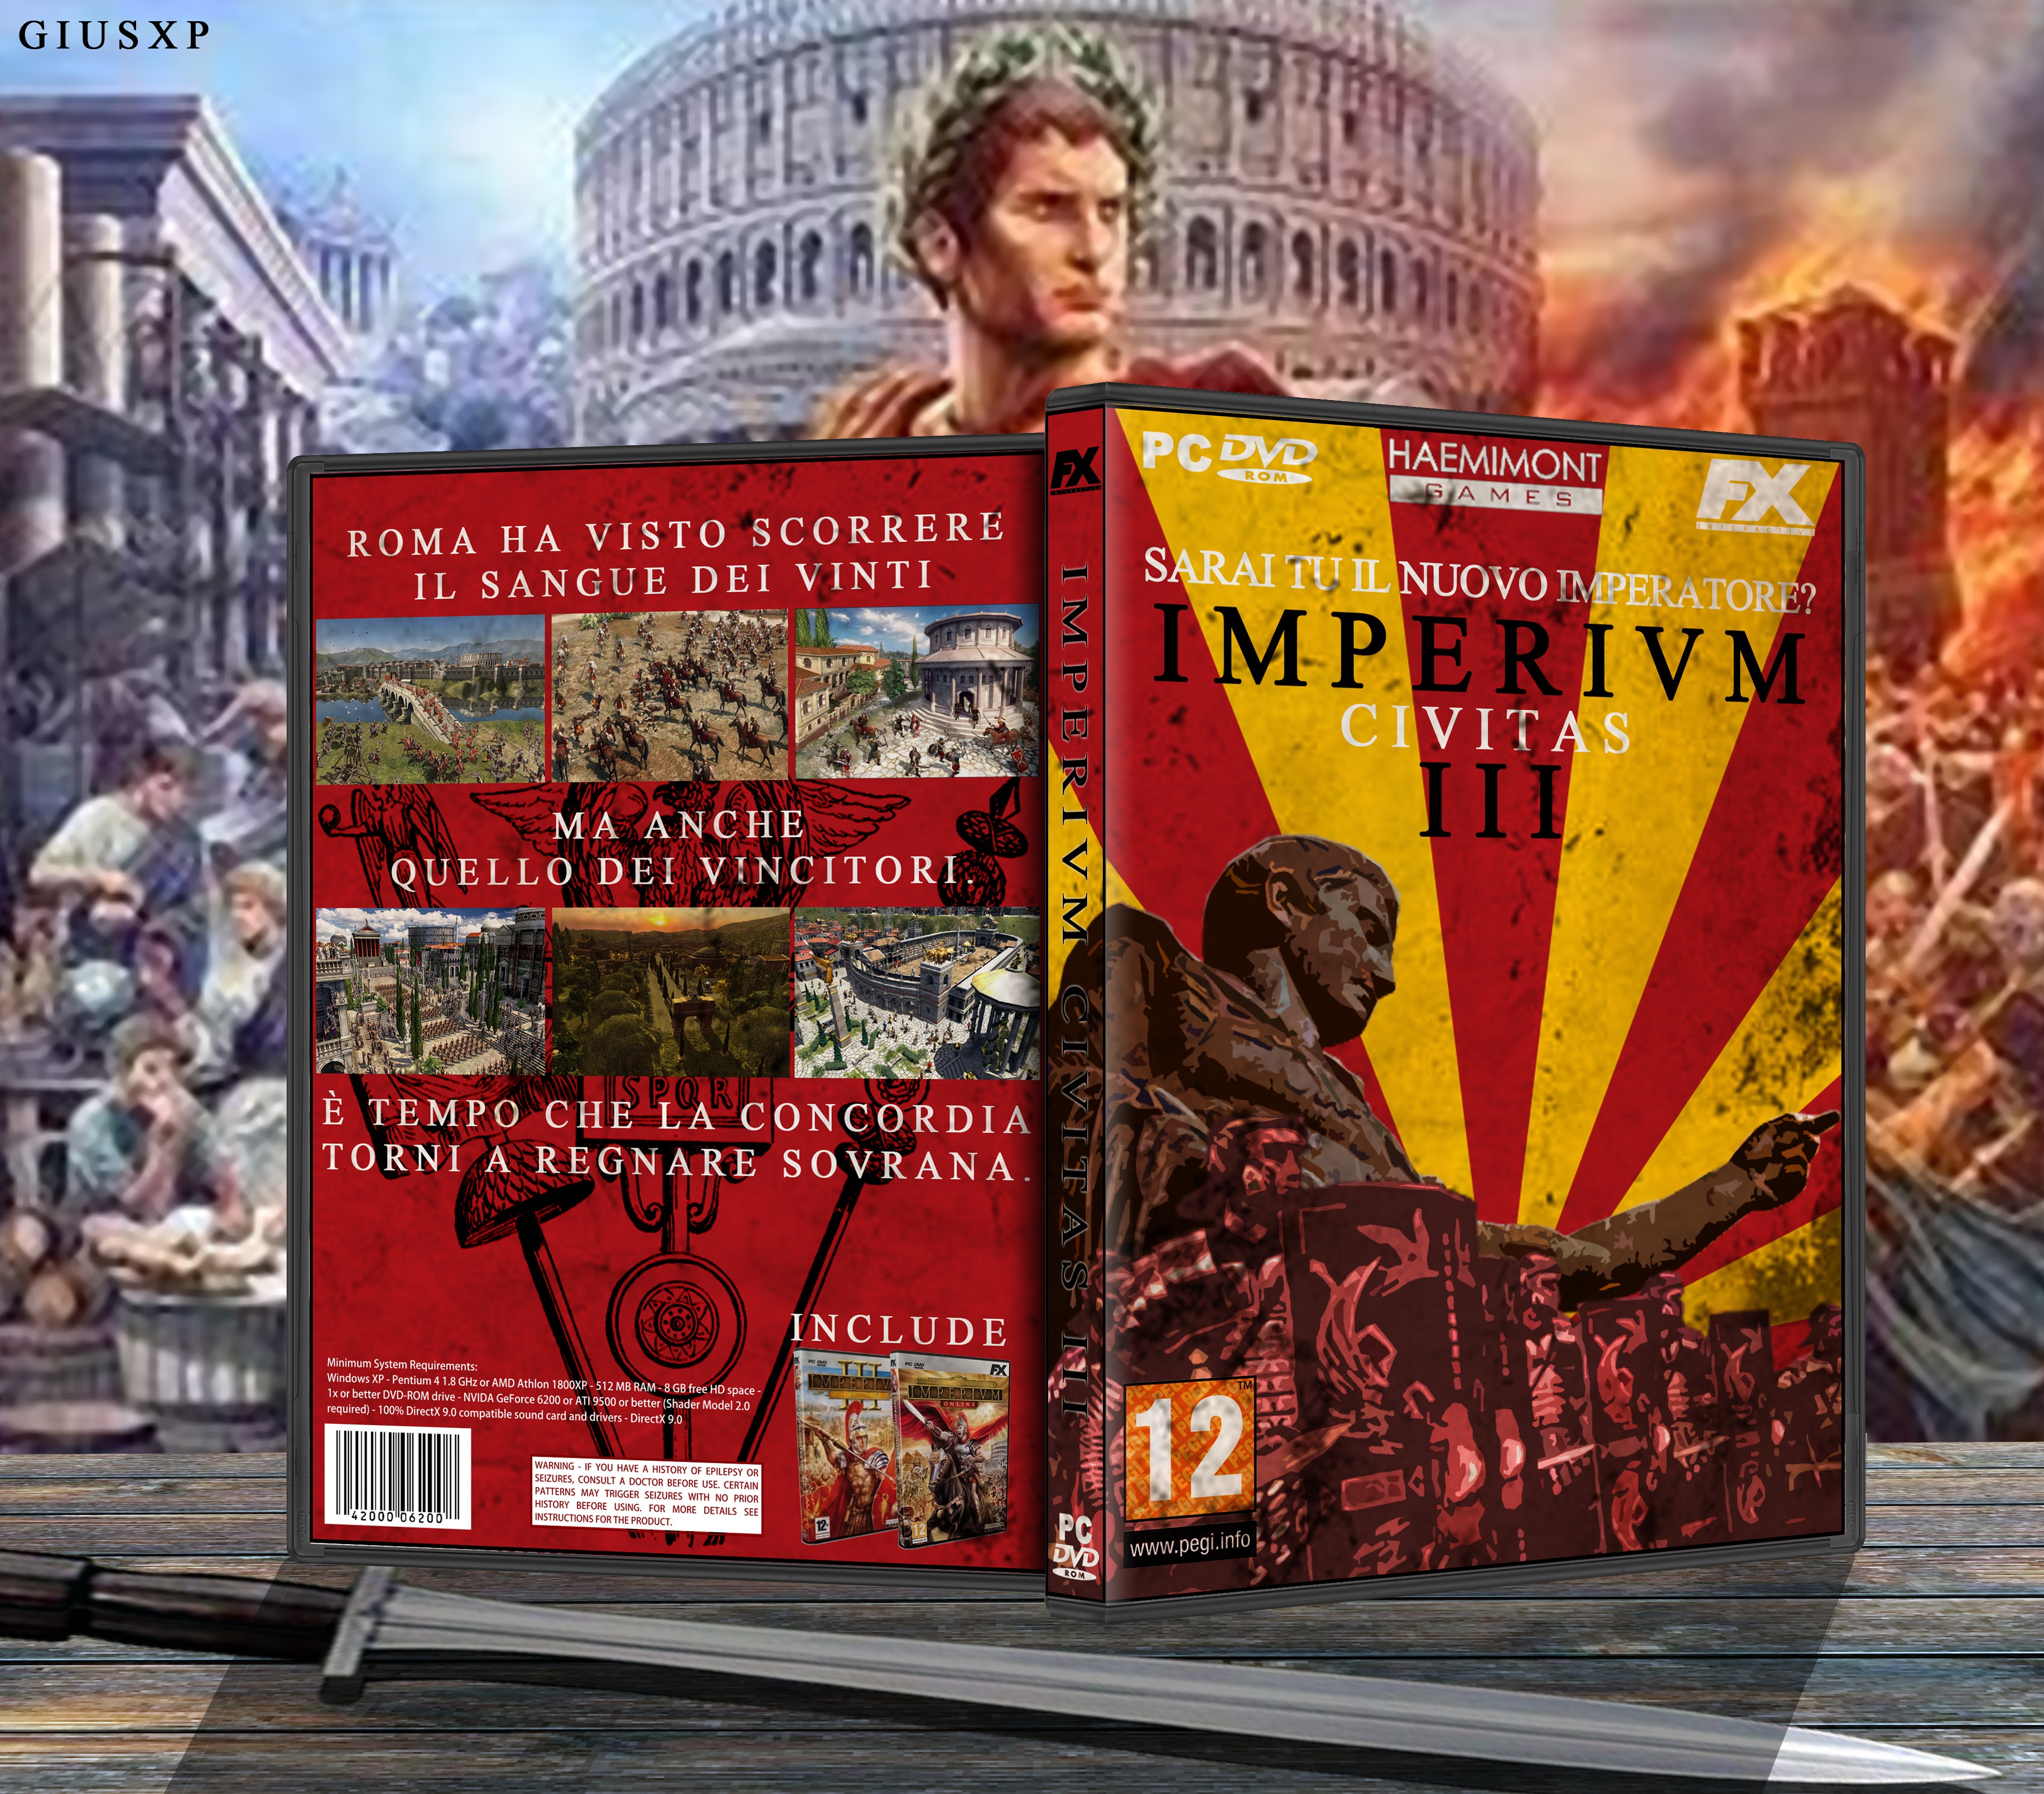 Imperivm Civitas III box cover